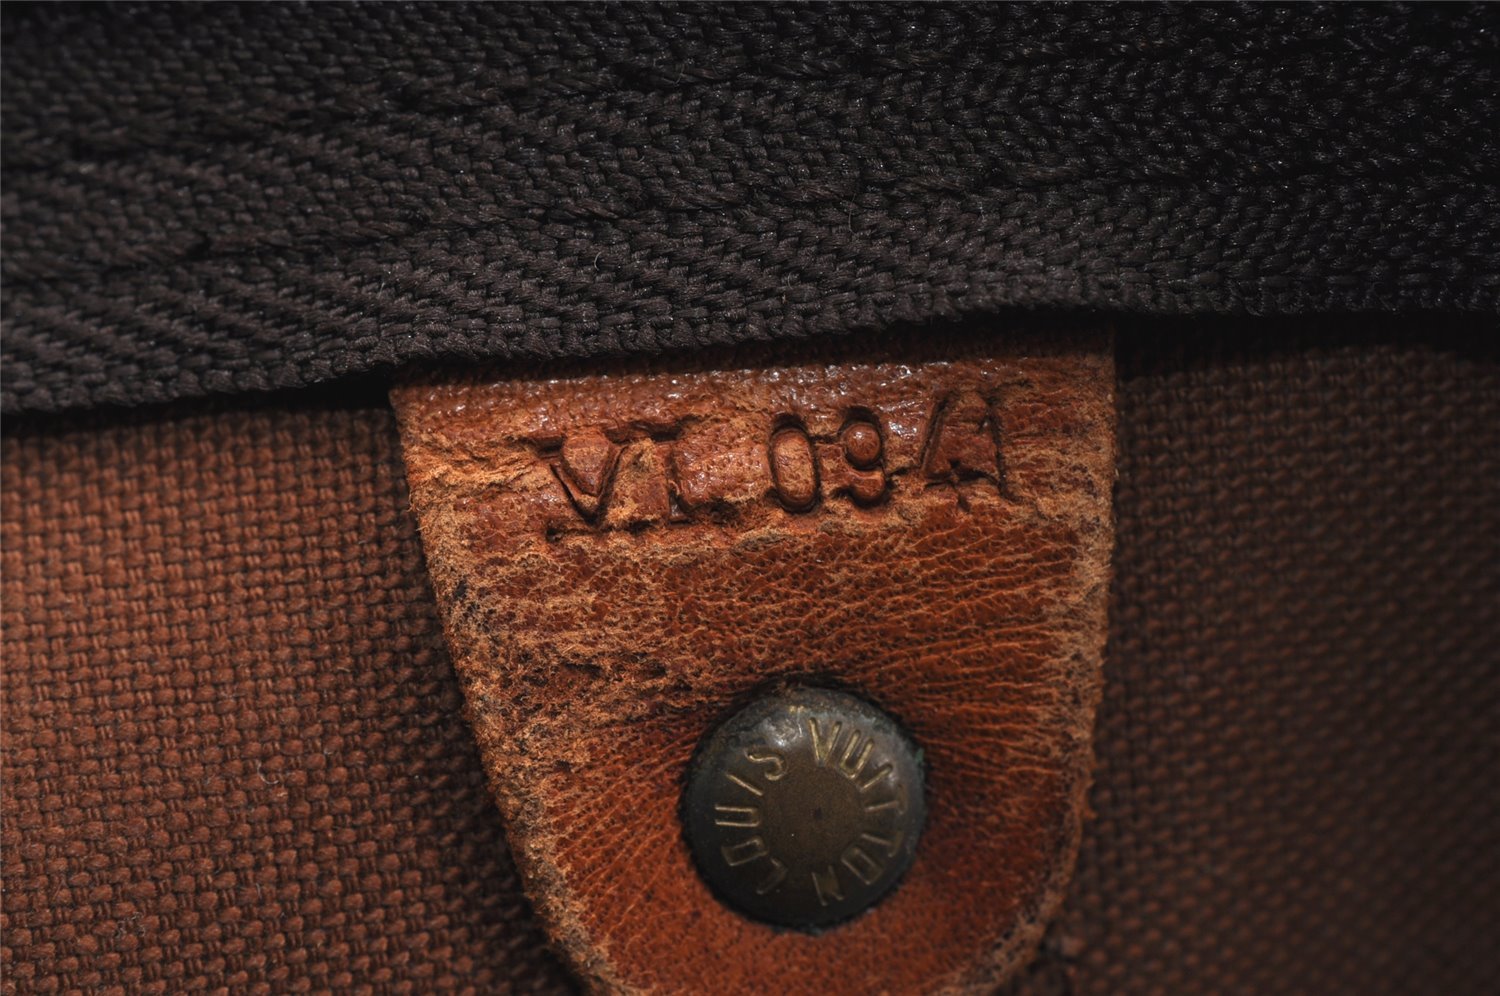 Auth Louis Vuitton Monogram Keepall Bandouliere 50 M41416 Boston Bag Junk 9574J